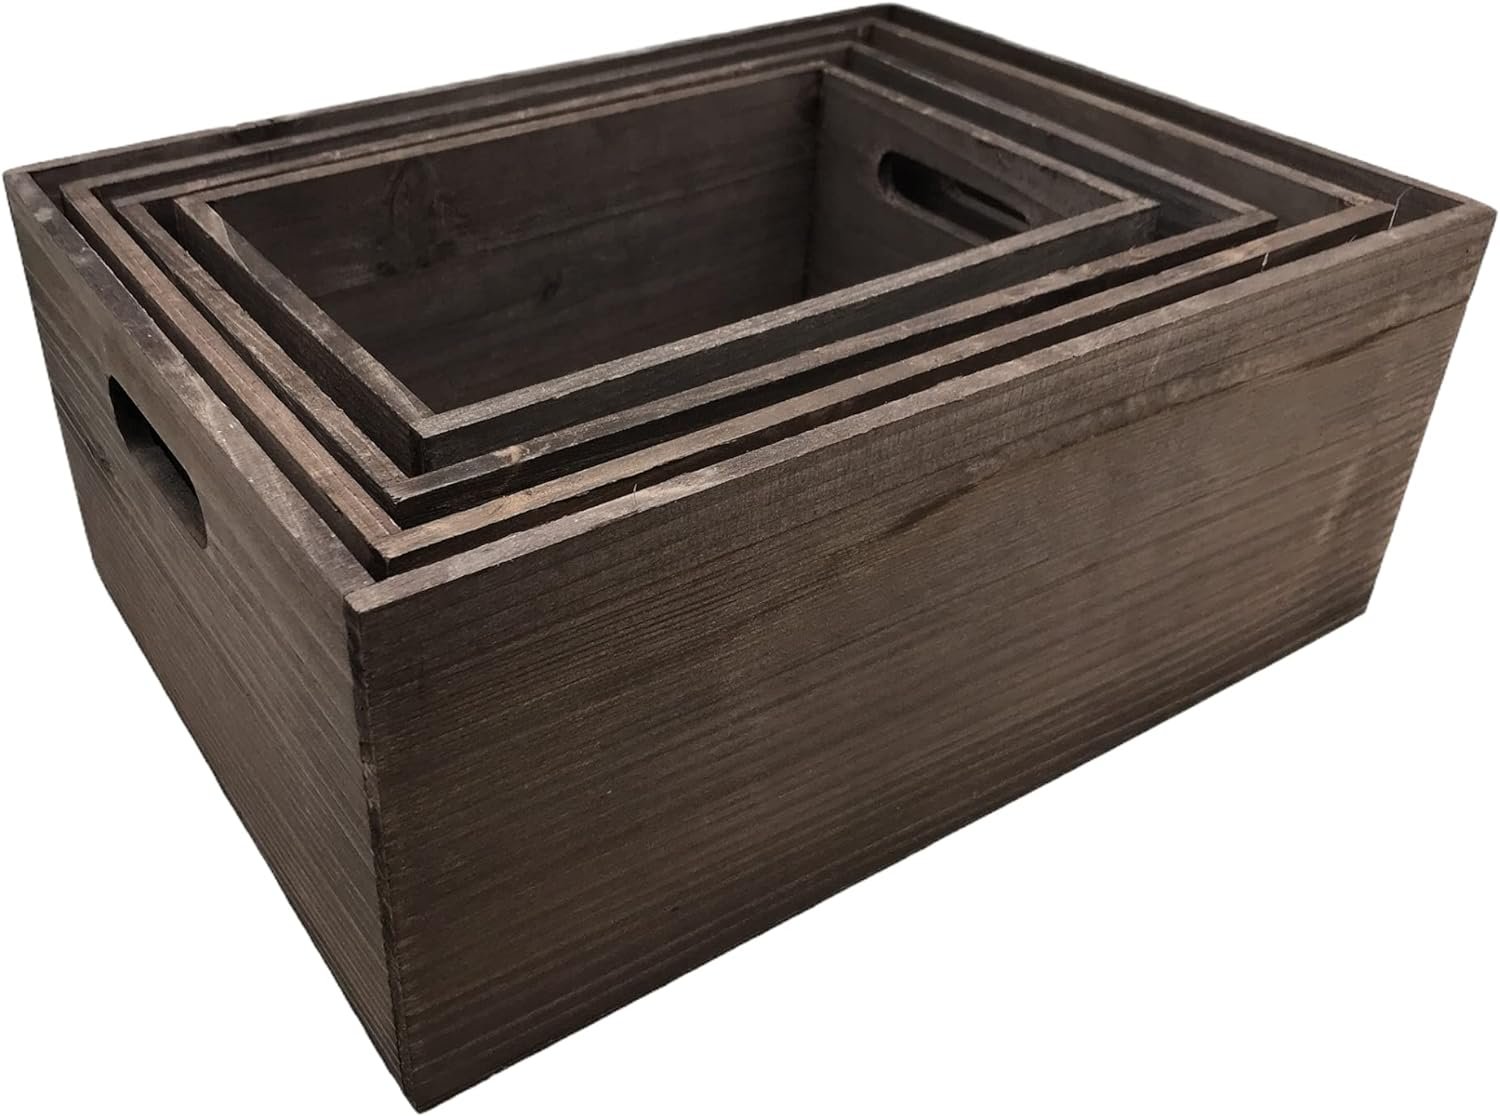 Oojami Wood Crates Review